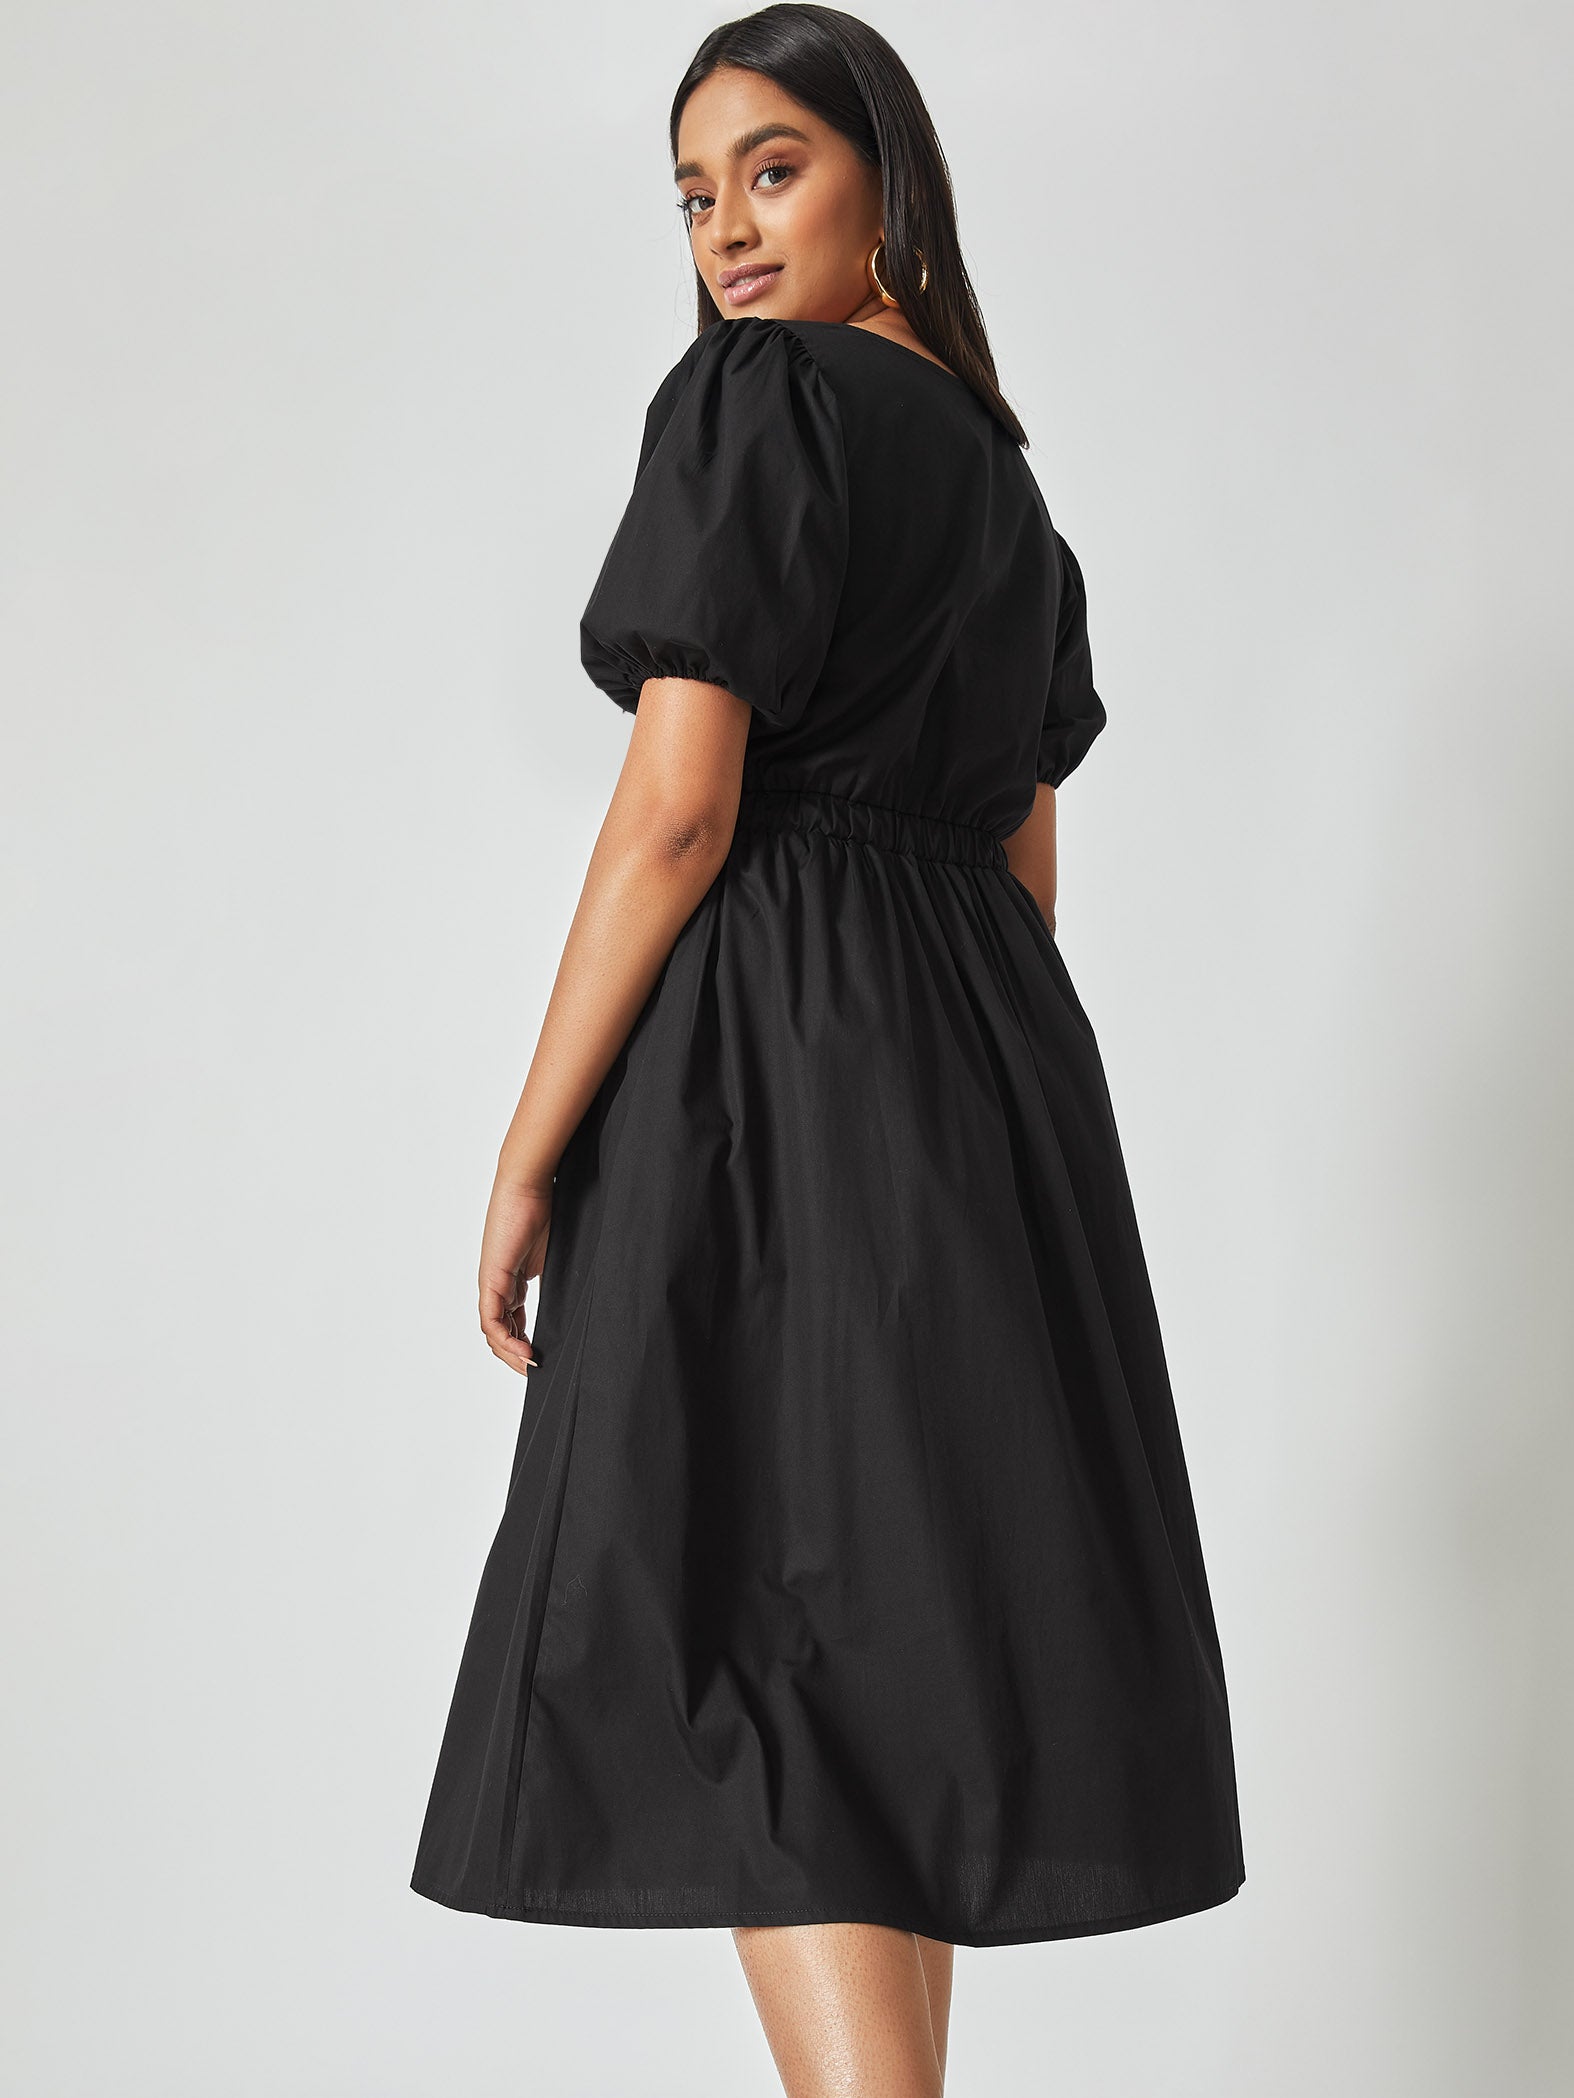 Black Puff Sleeve Cinched Dress